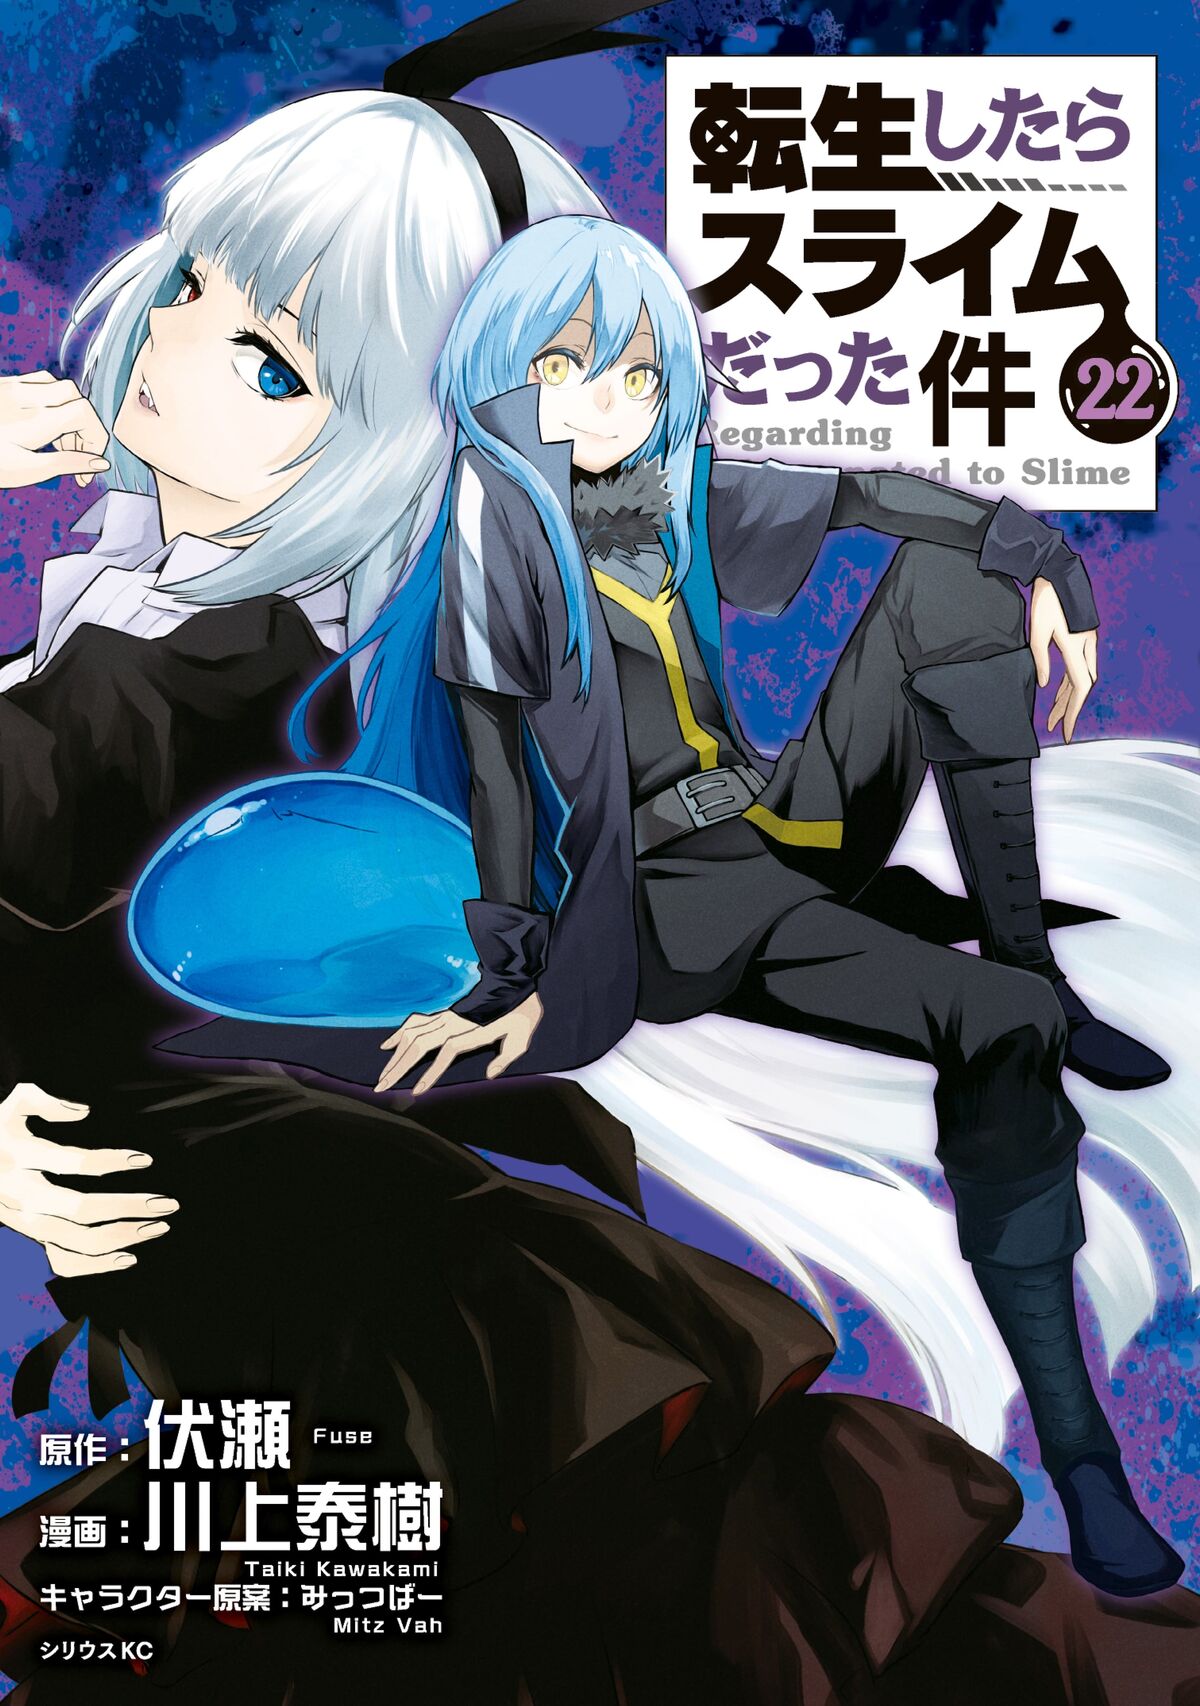 ART] Tensei Shitara Slime Datta Ken Volume 20 Covers : r/manga